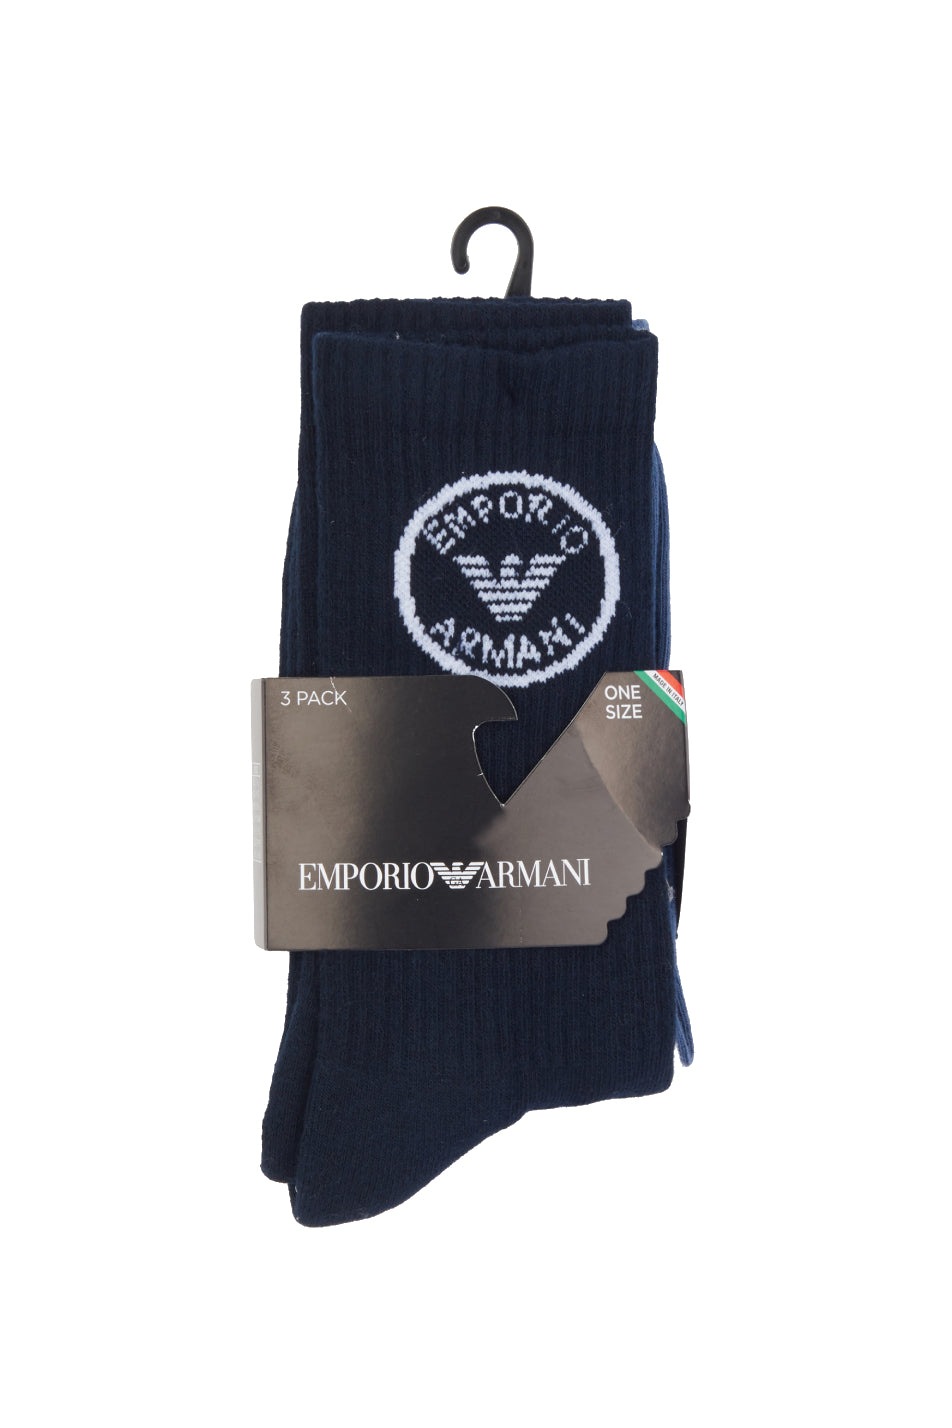 Emporio Armani Men's 3 Pack Knit Short Sock